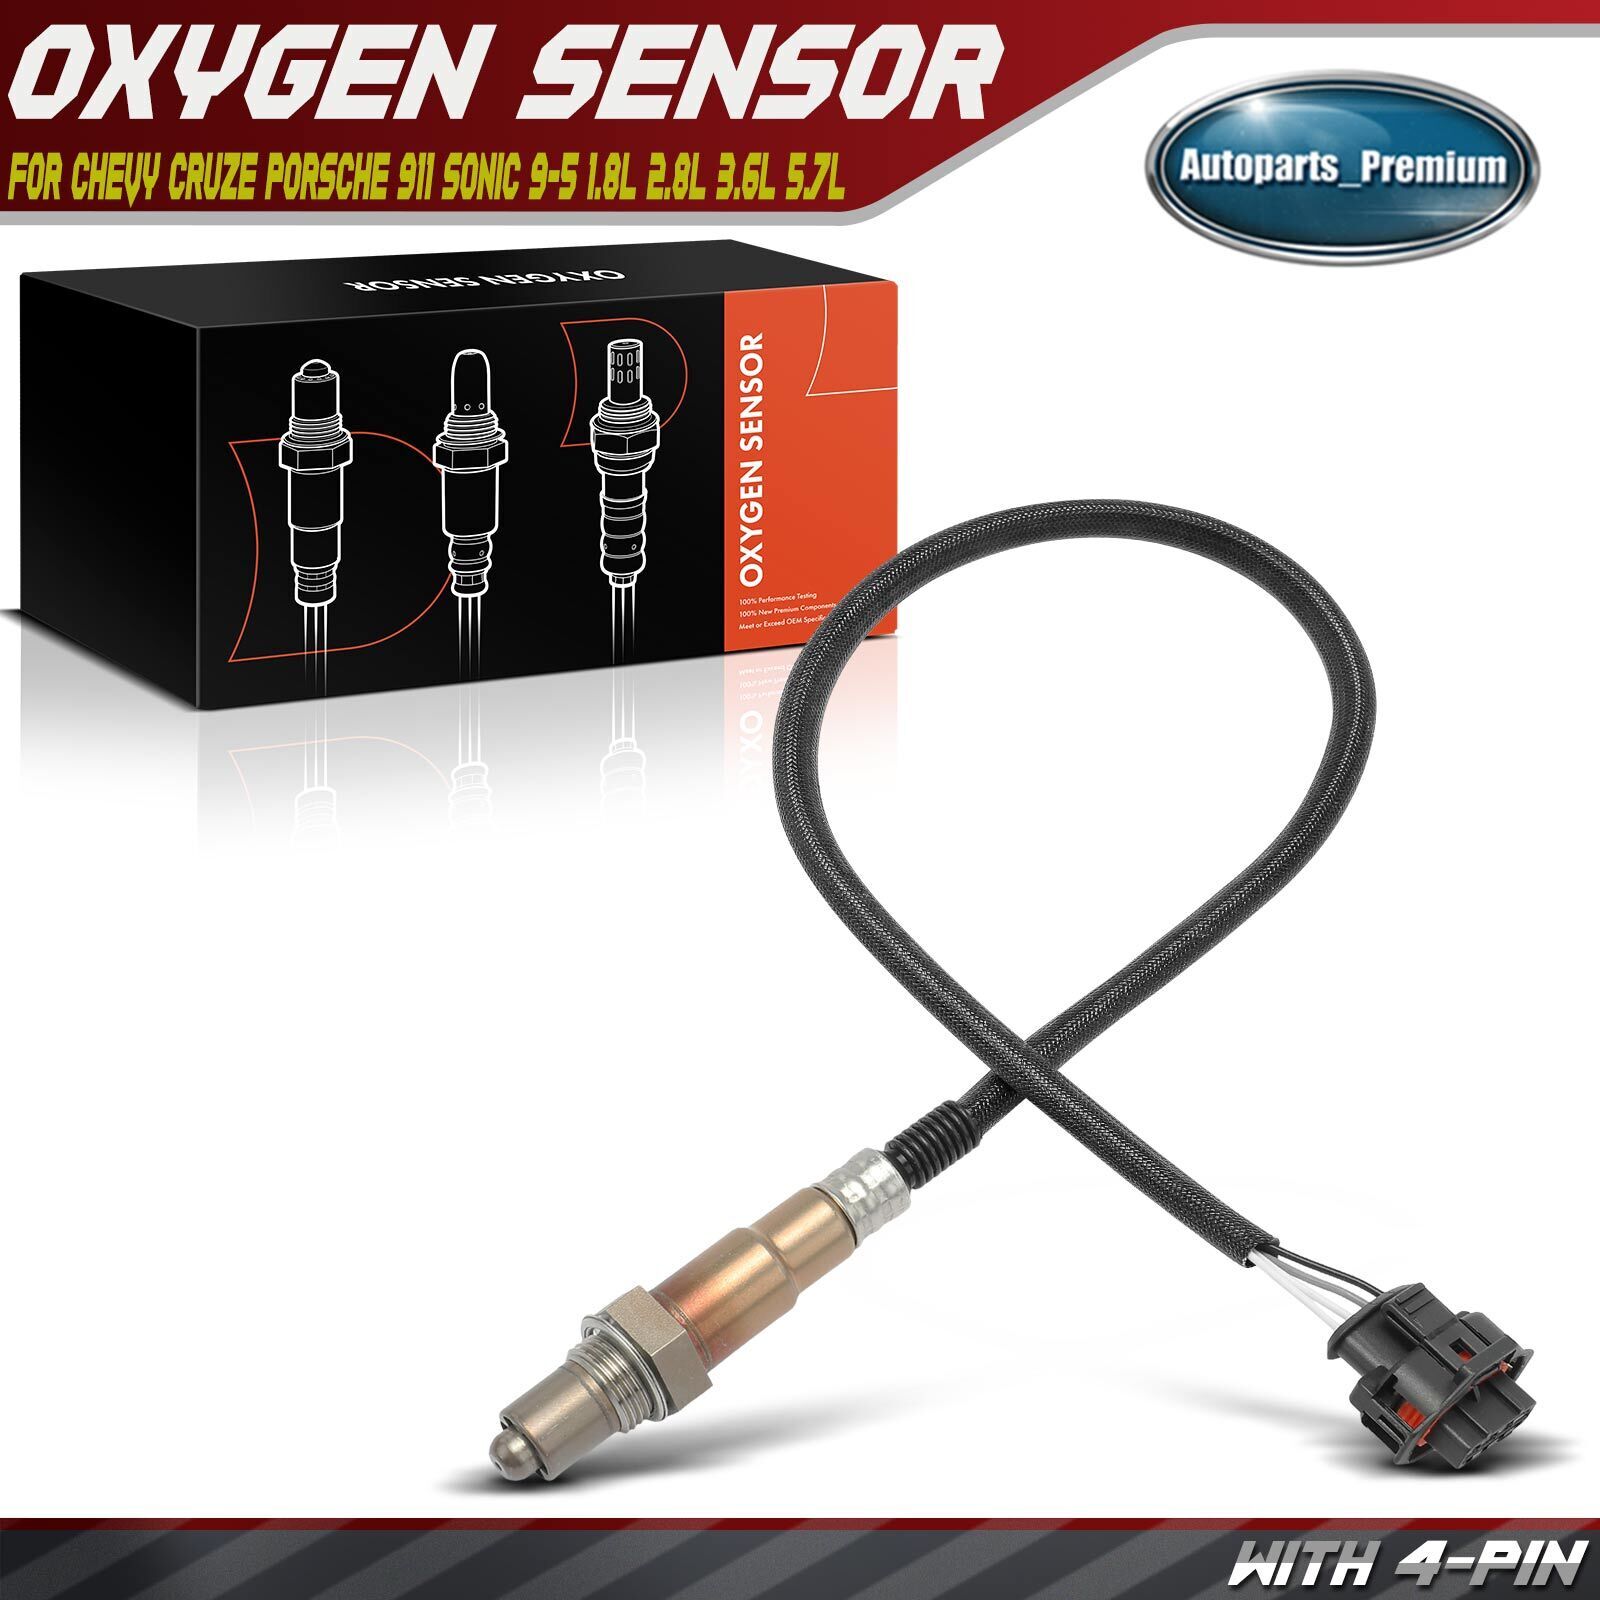 O2 Oxygen Sensor for Chevy Cruze Sonic Porsche 911 Macan Saab 9-5 Up /Downstream